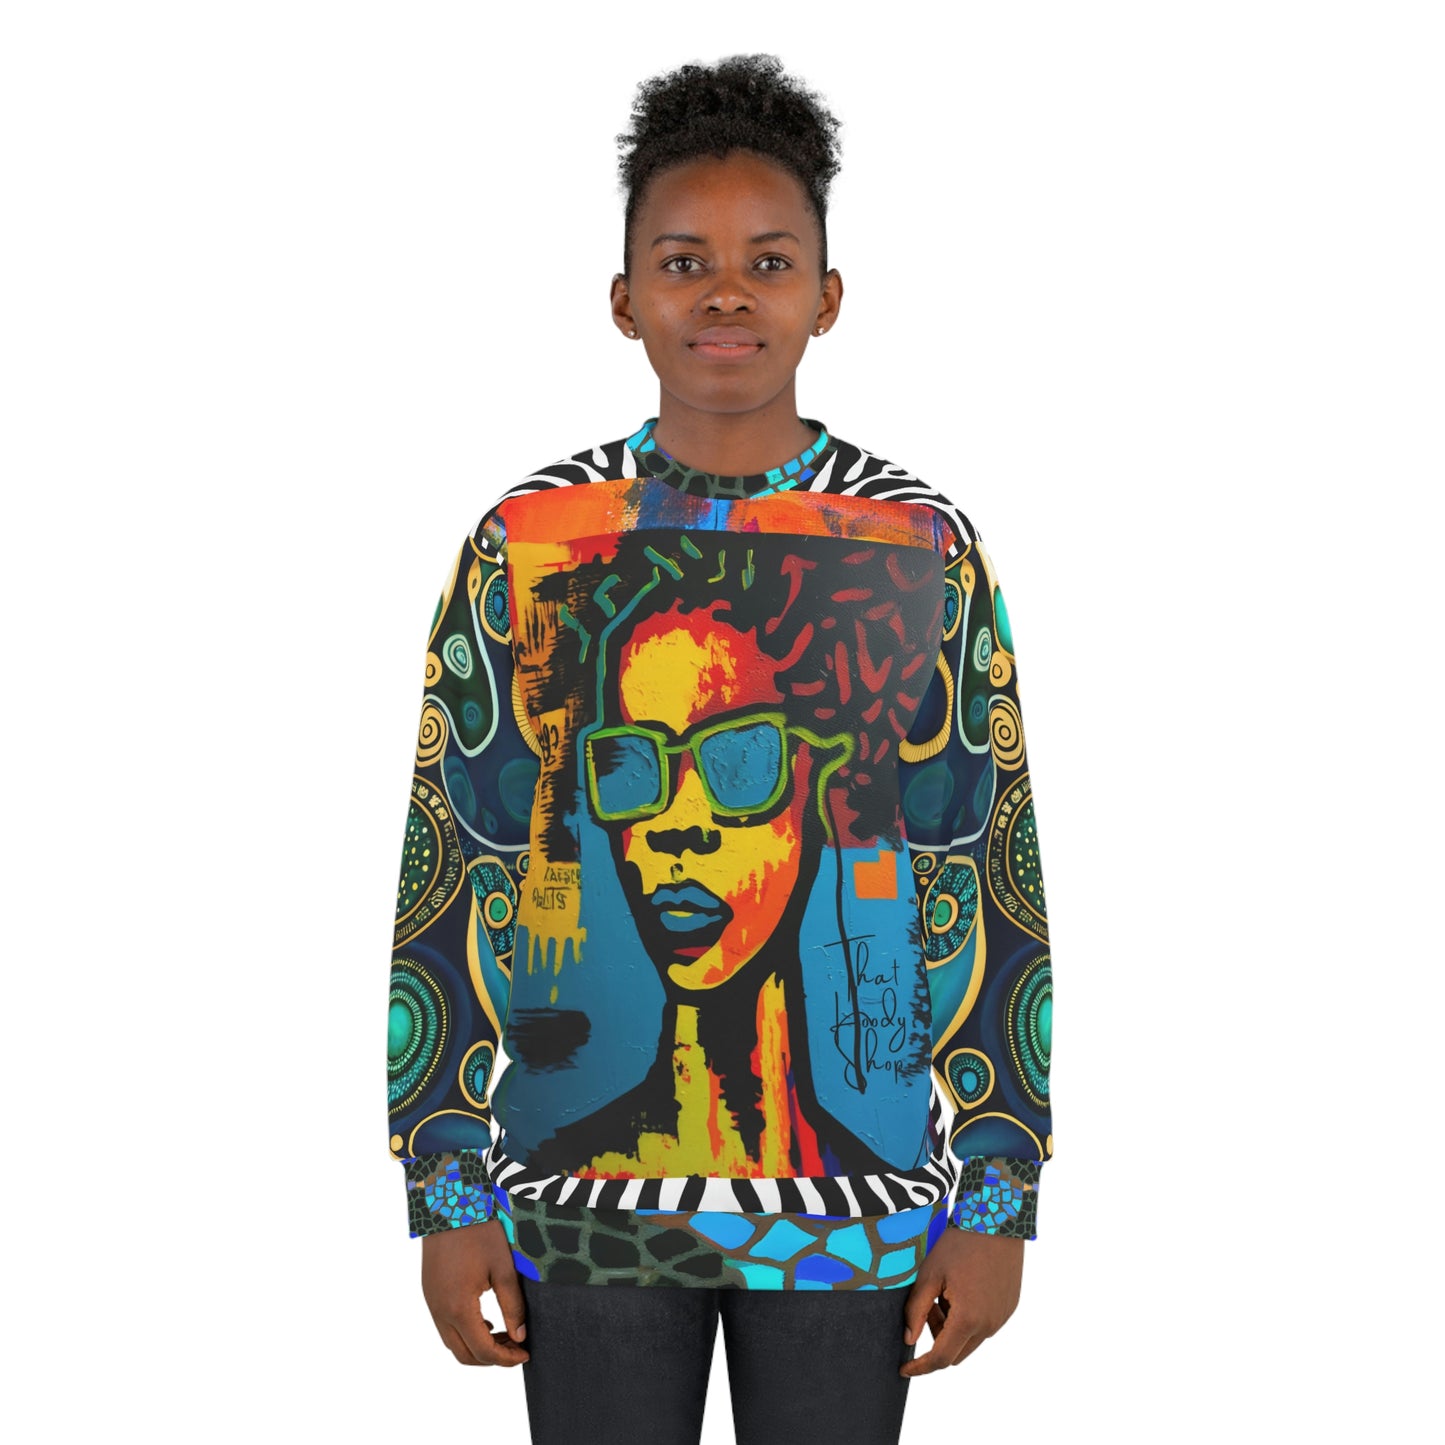 Girl With Attitude Graffiti Art Unisex Sweatshirt